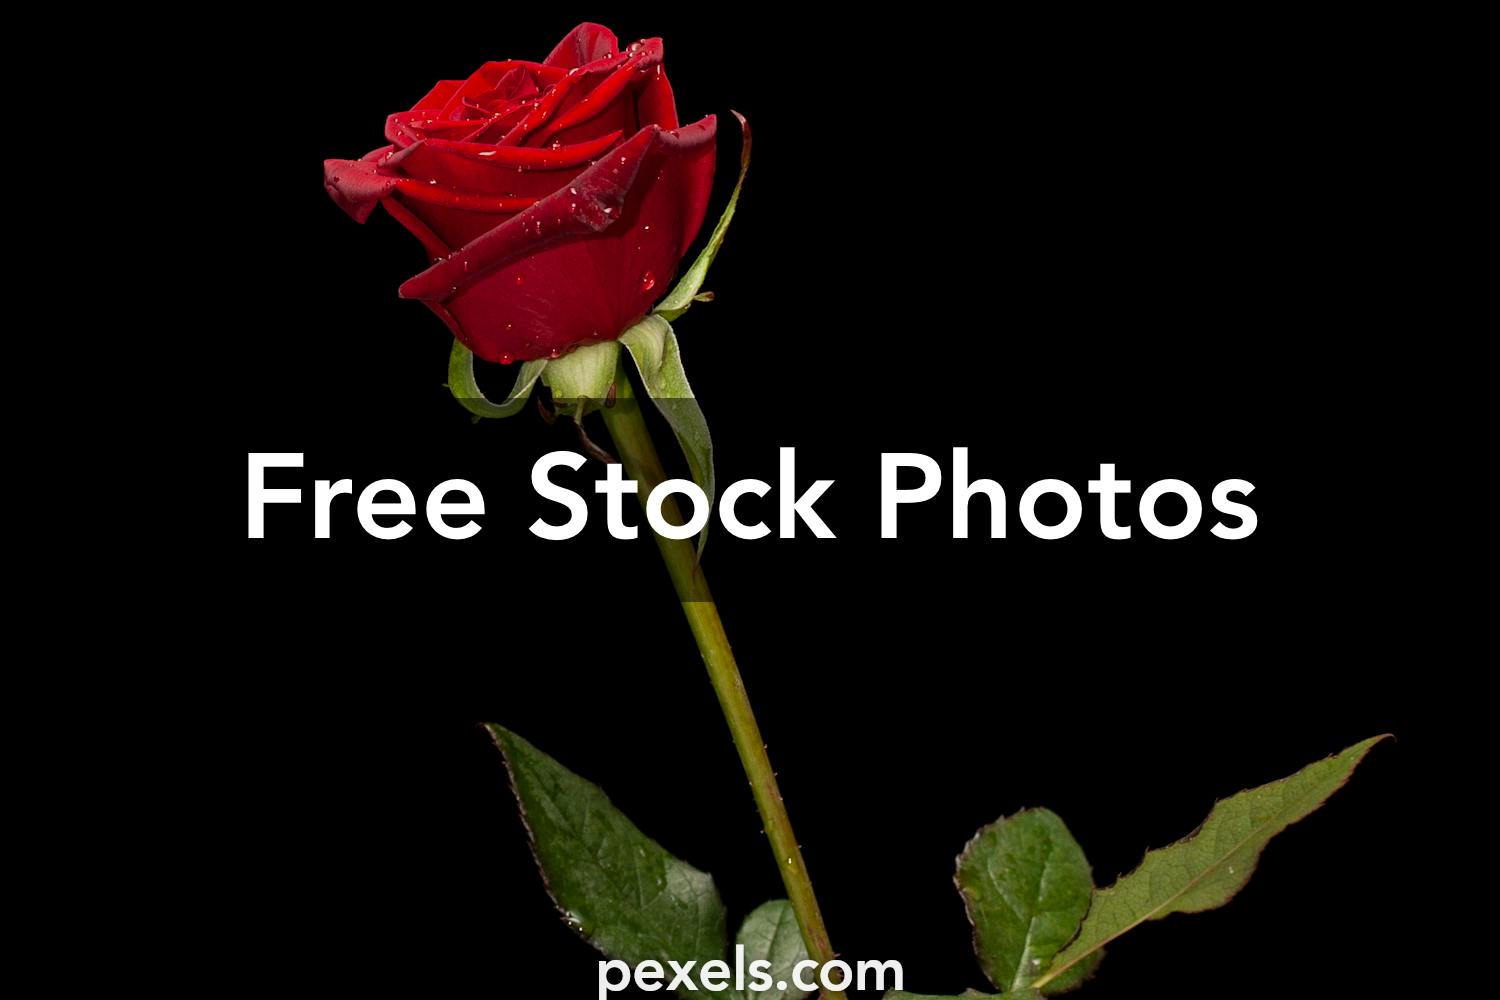 1000 Amazing Red Rose Photos Pexels Free Stock Photos Images, Photos, Reviews